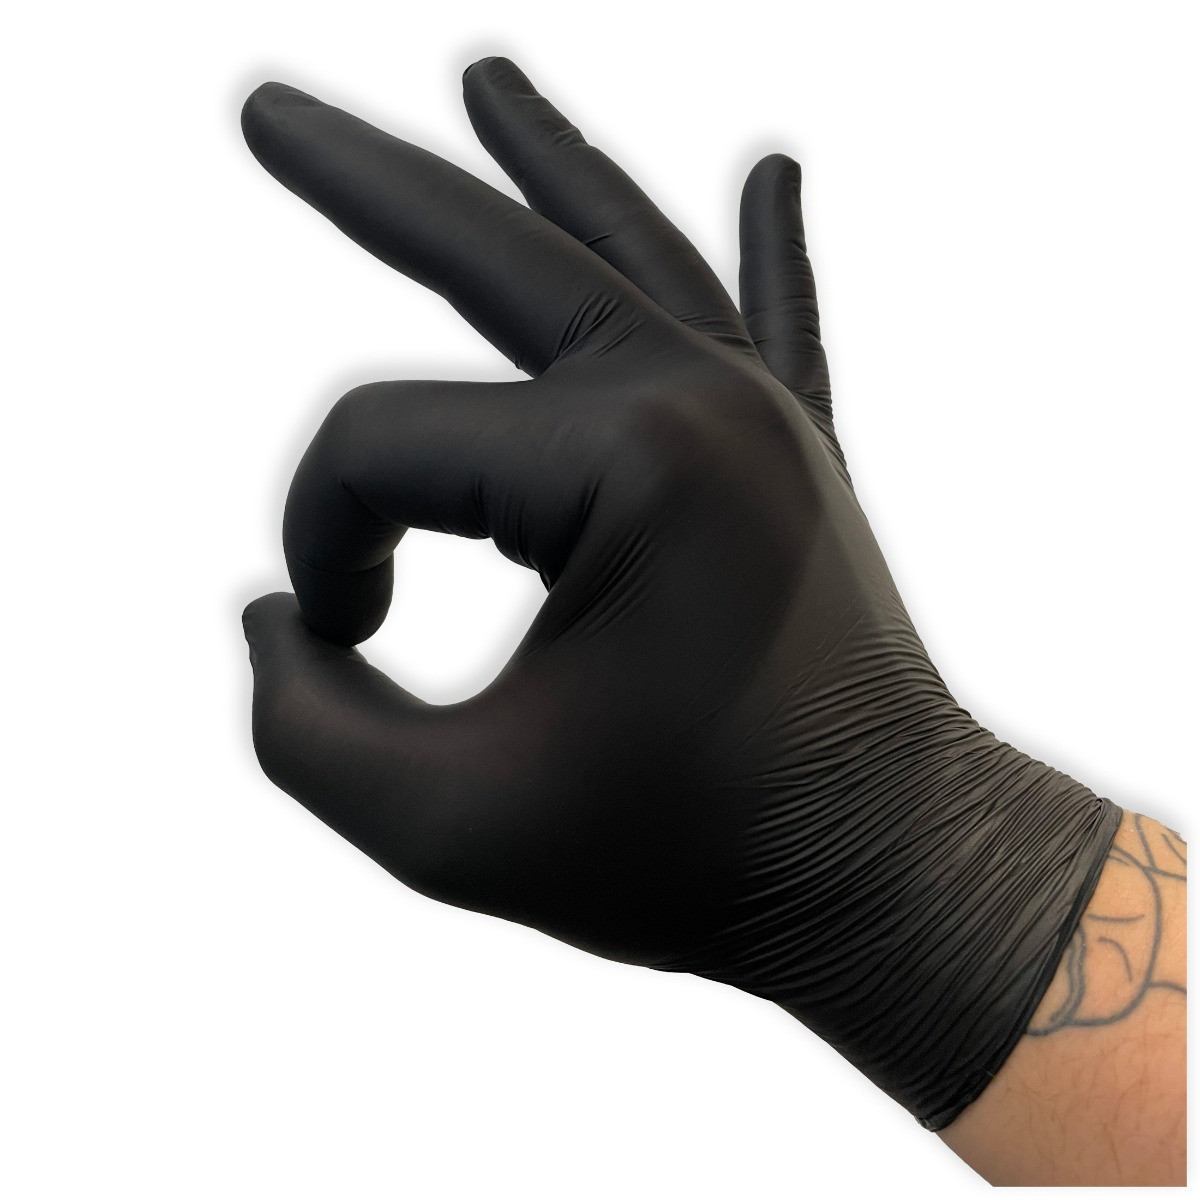 Rękawiczki nitrylowe czarne rozmiar l (8-9) 100 sztuk medasept